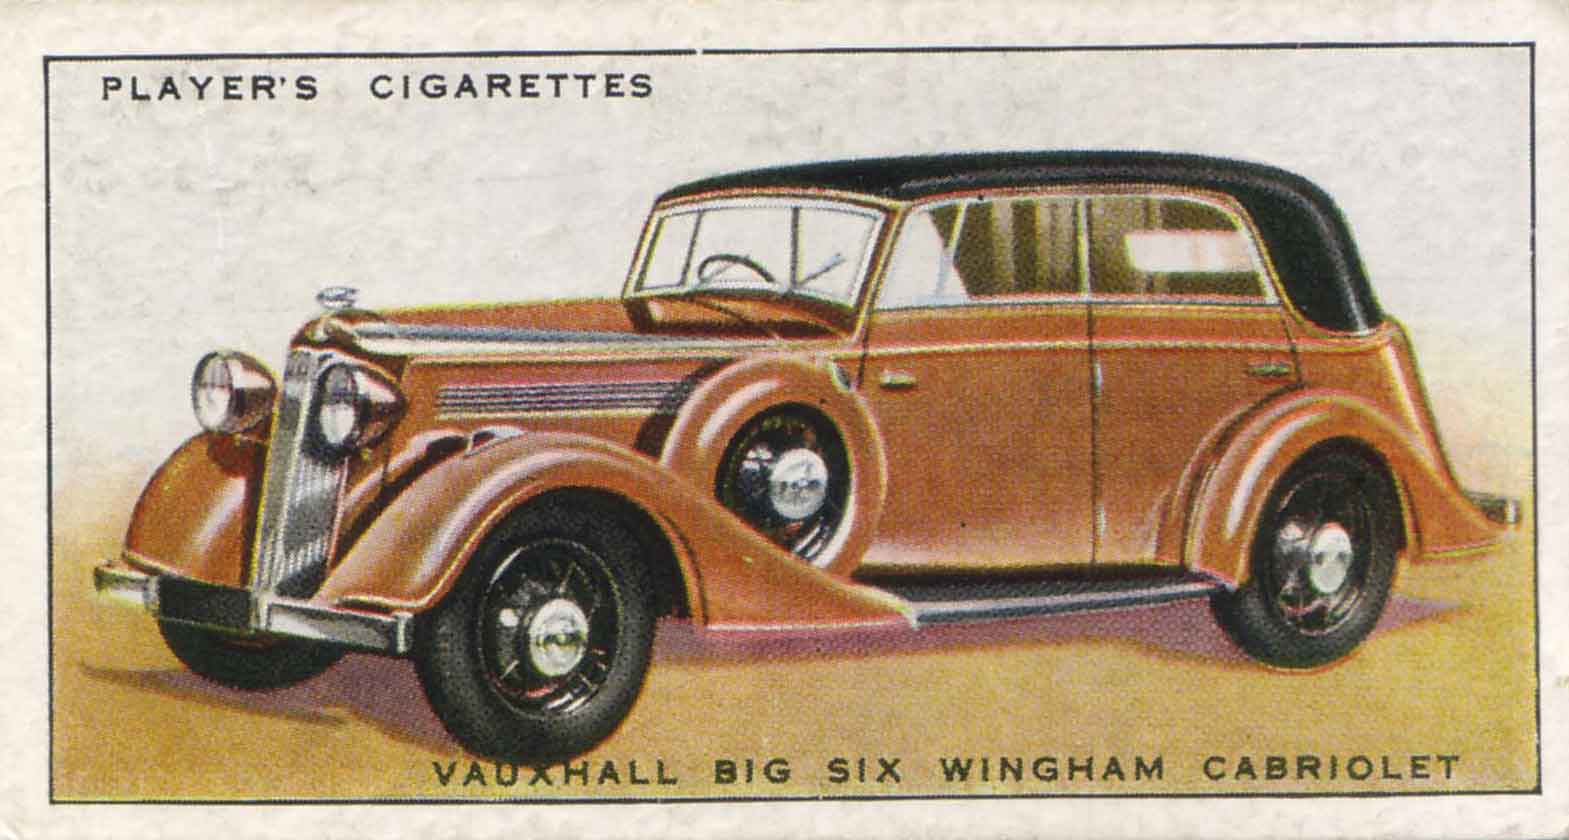 Vauxhall Big Six Wingham Cabriolet. 1937 cigarette card.